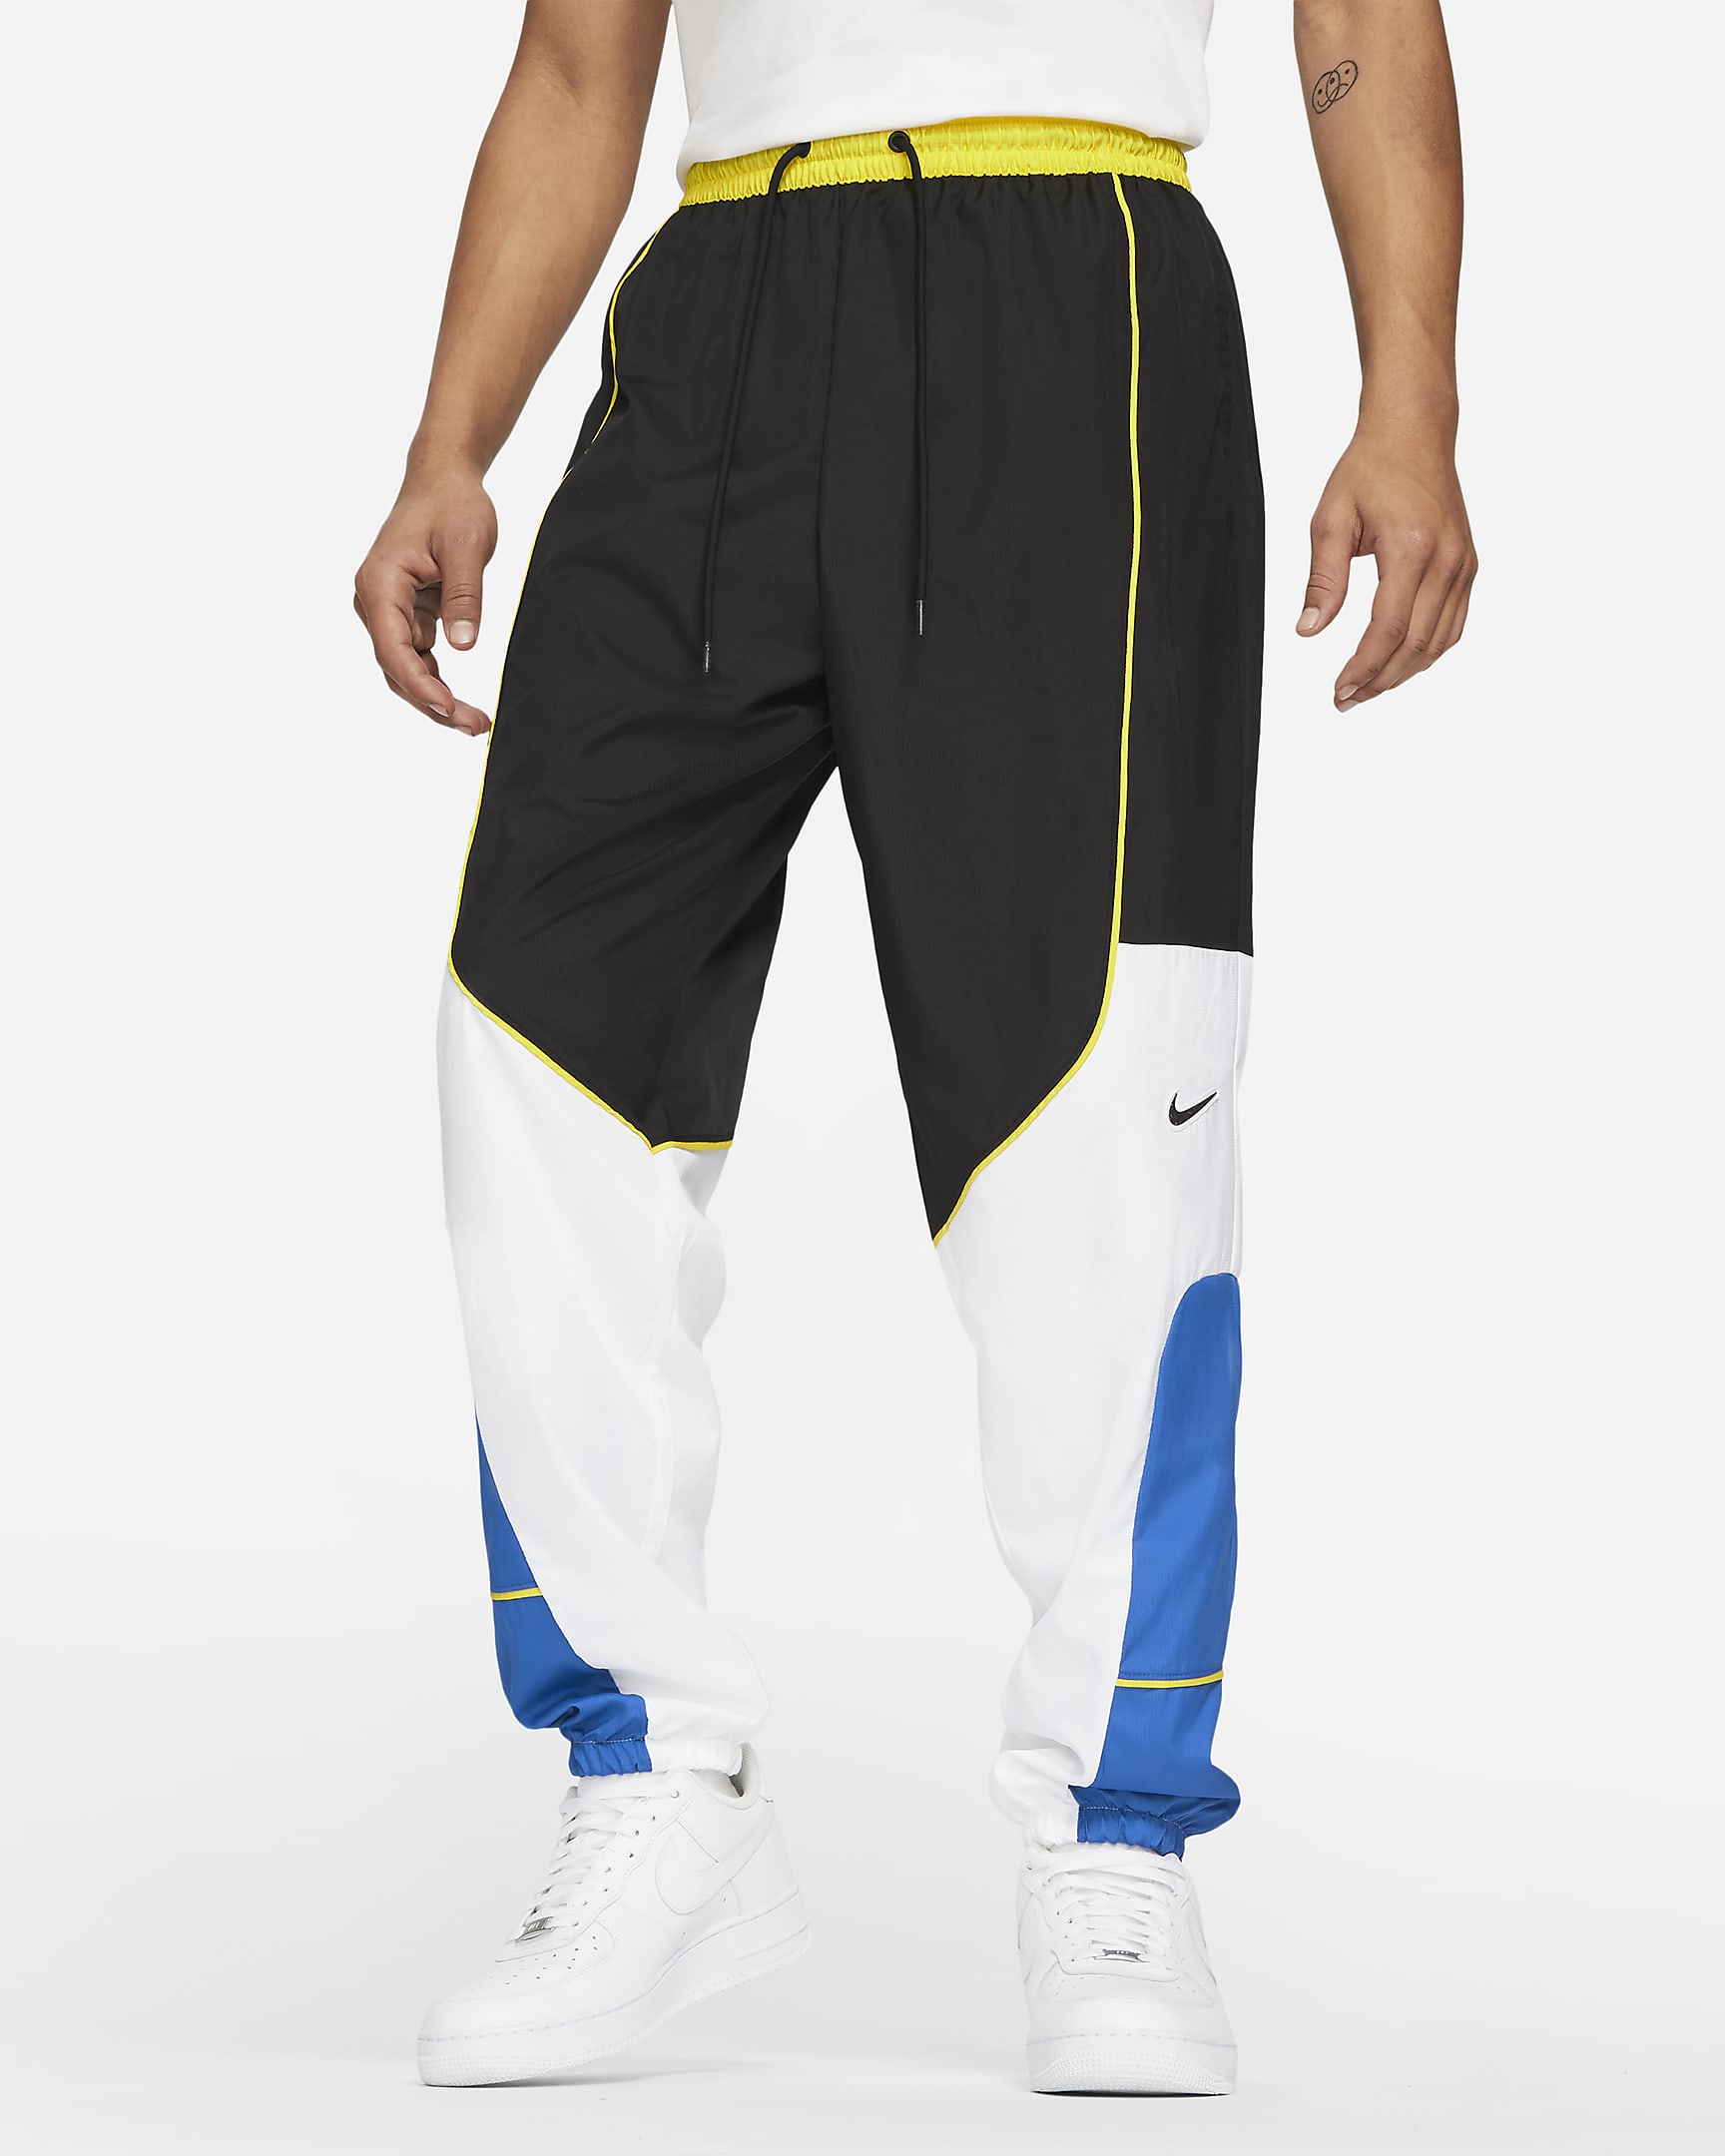 Nike Air Griffey Max 1 Varsity Royal Shirts Outfits to Match